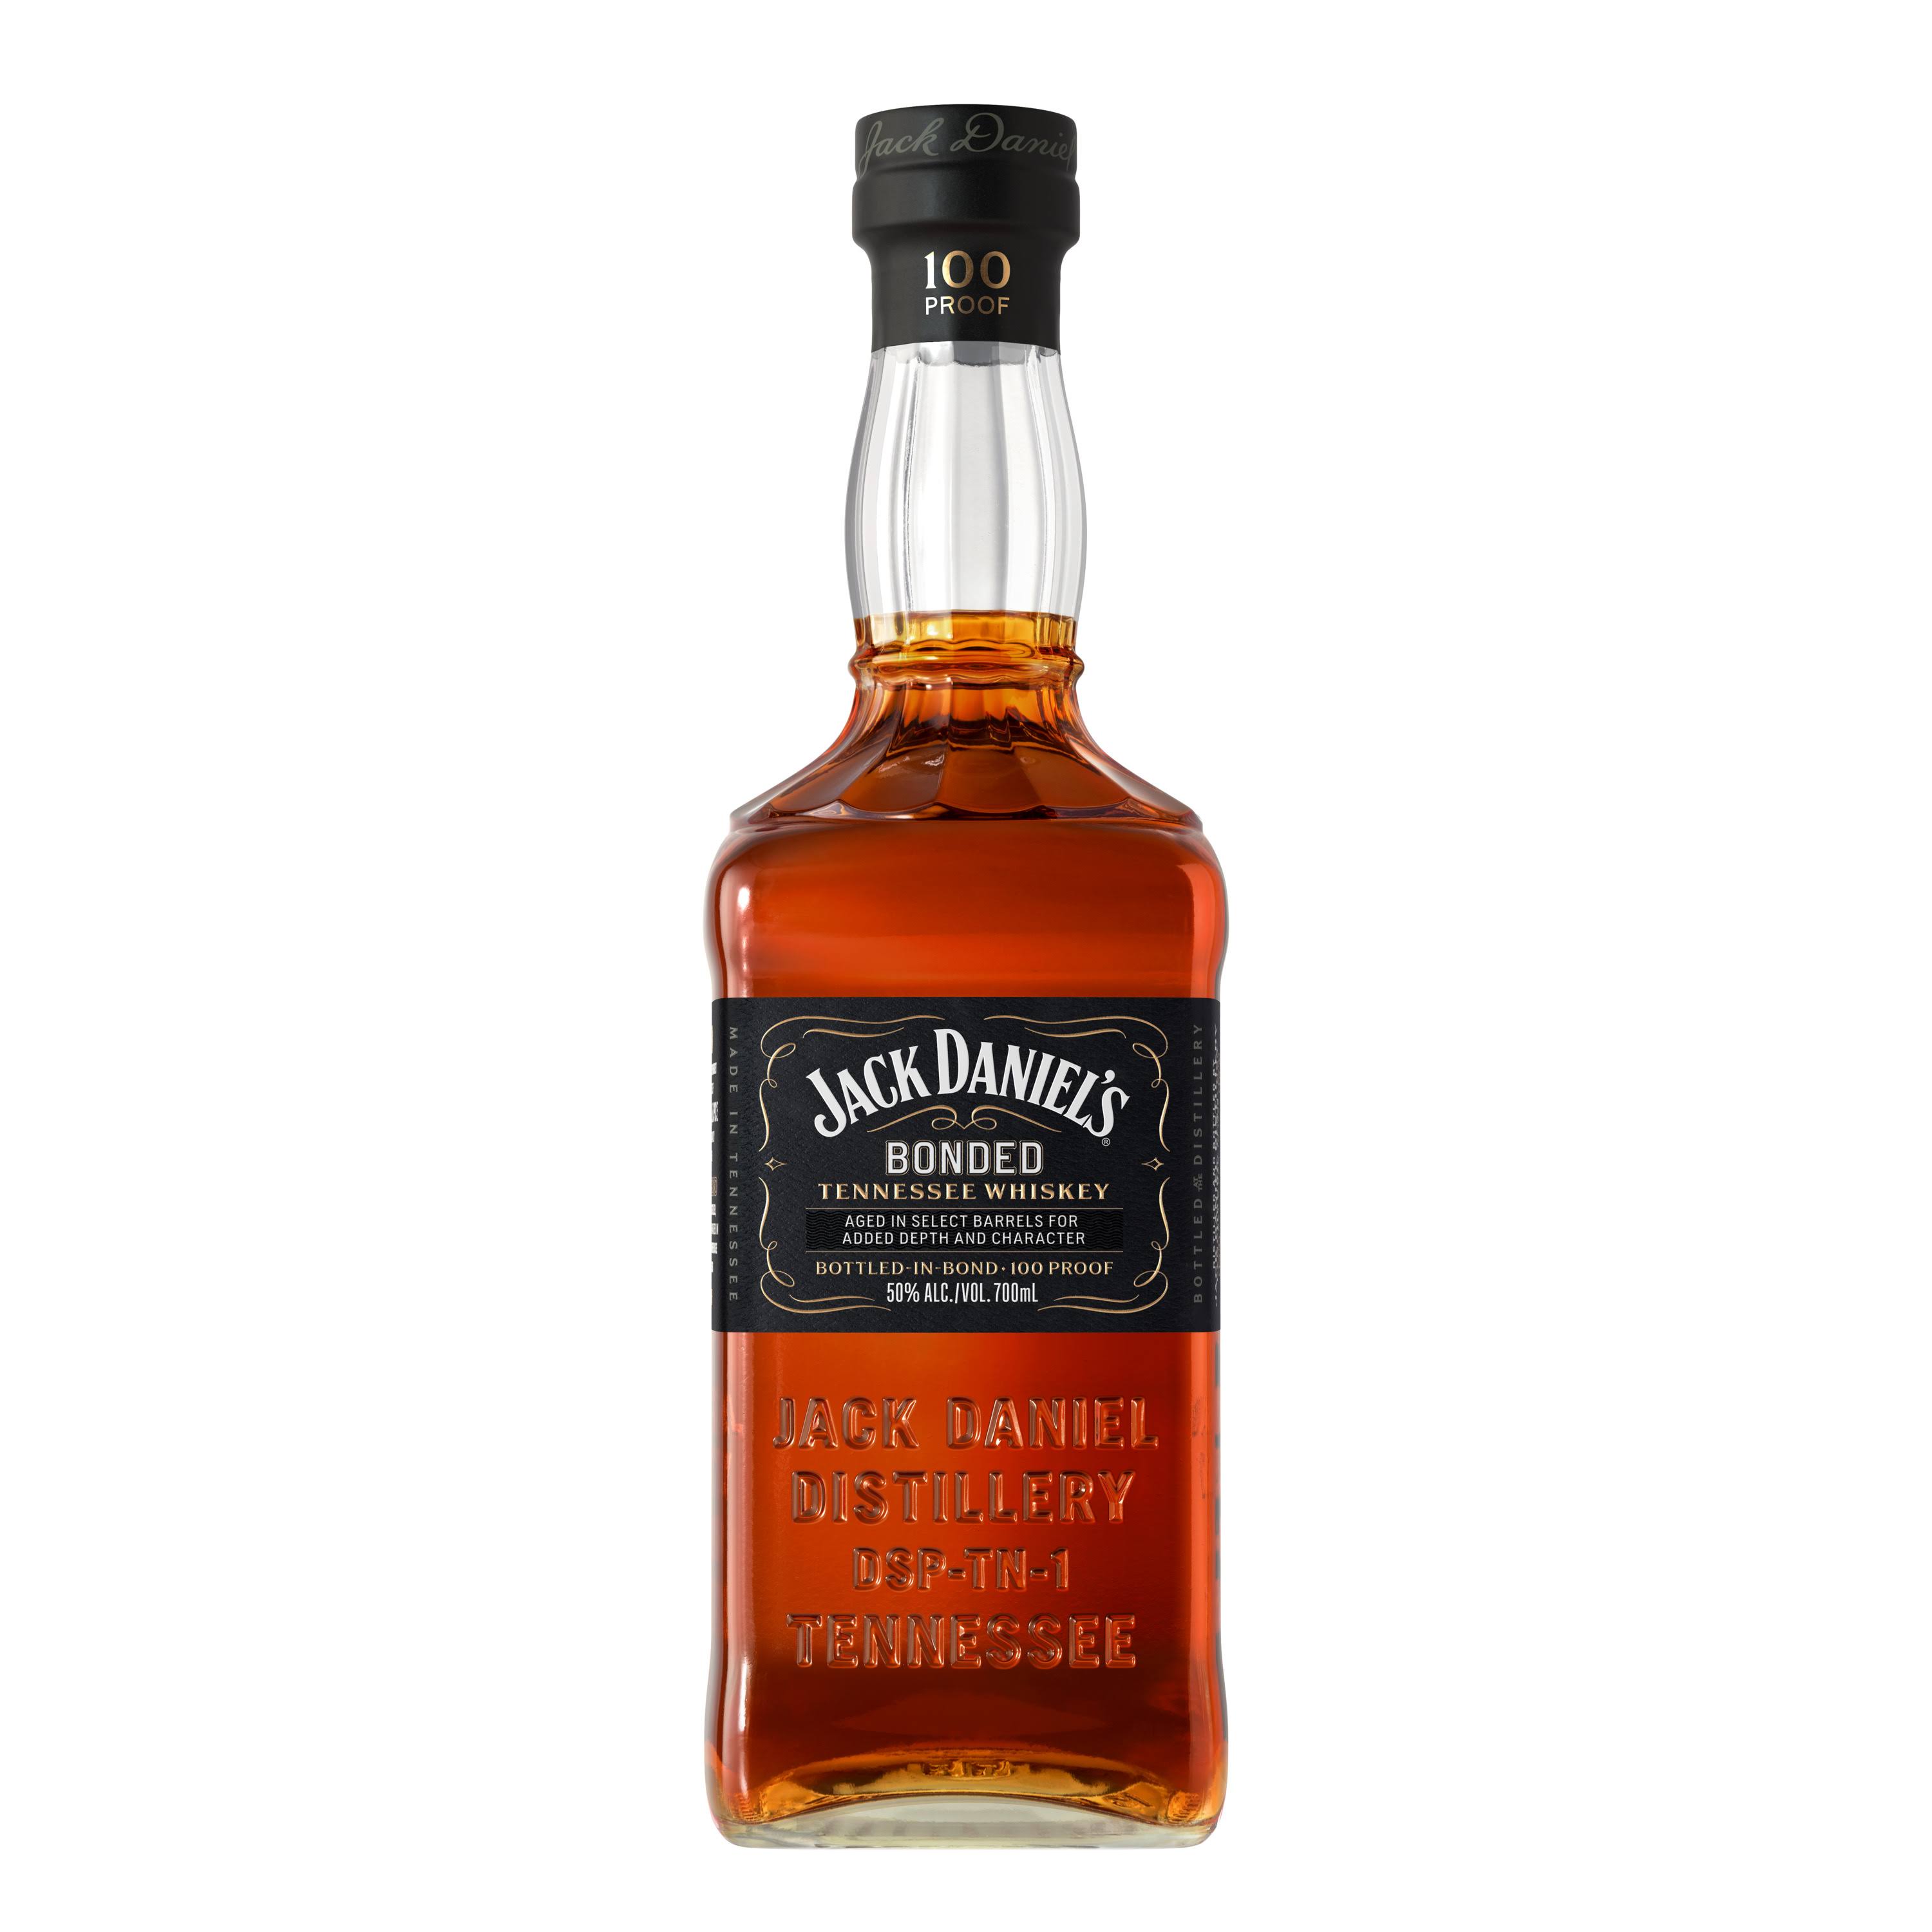 Jack Daniel's Tennessee Whiskey, Bonded - 700 ml